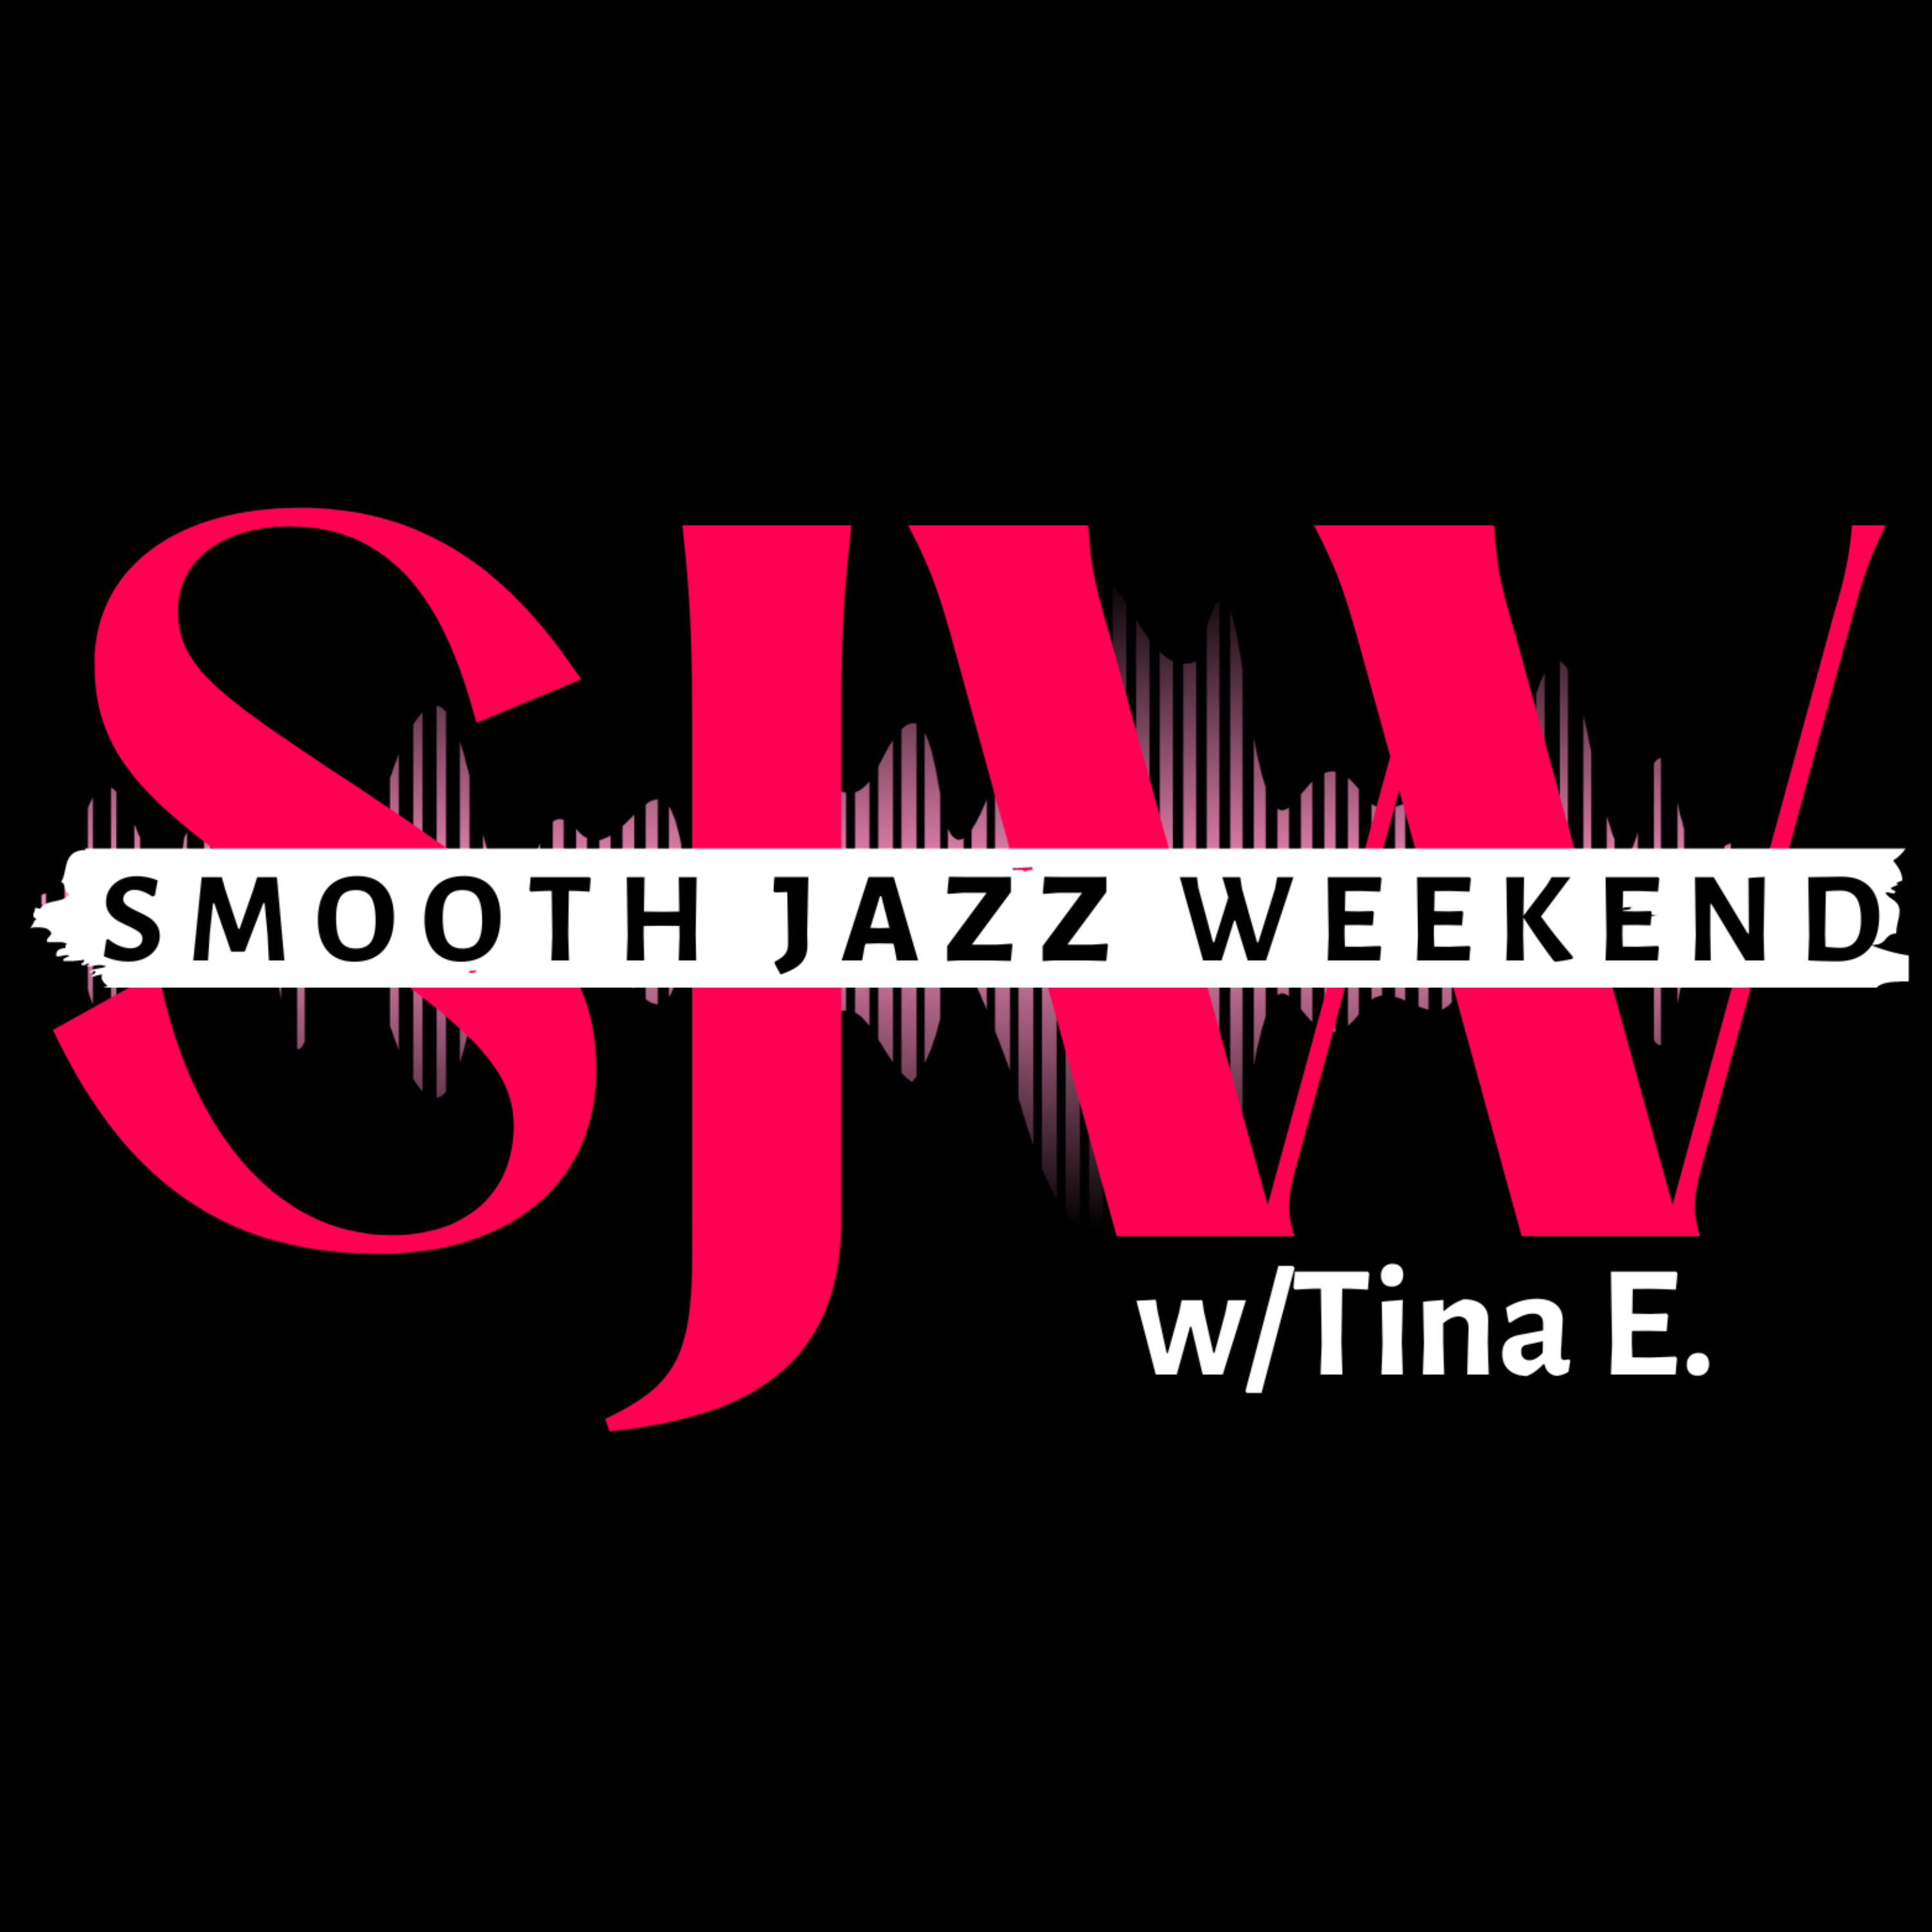 (Deeper) Smooth Jazz Weekend w/Tina E.